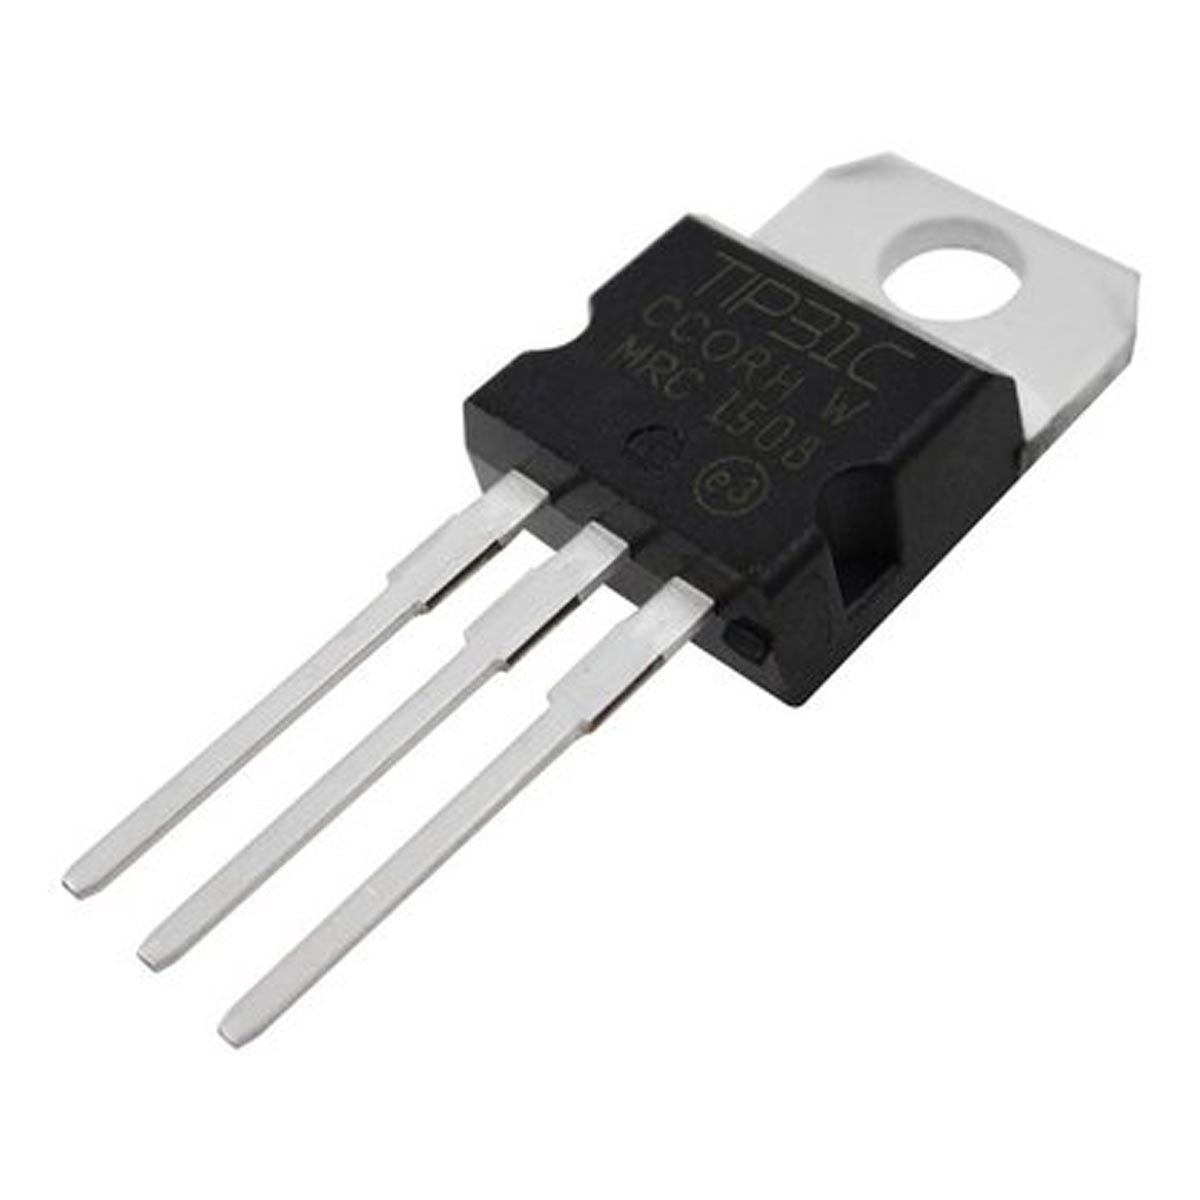 3x Transistor NPN TIP31c 100v 3A Power To-220